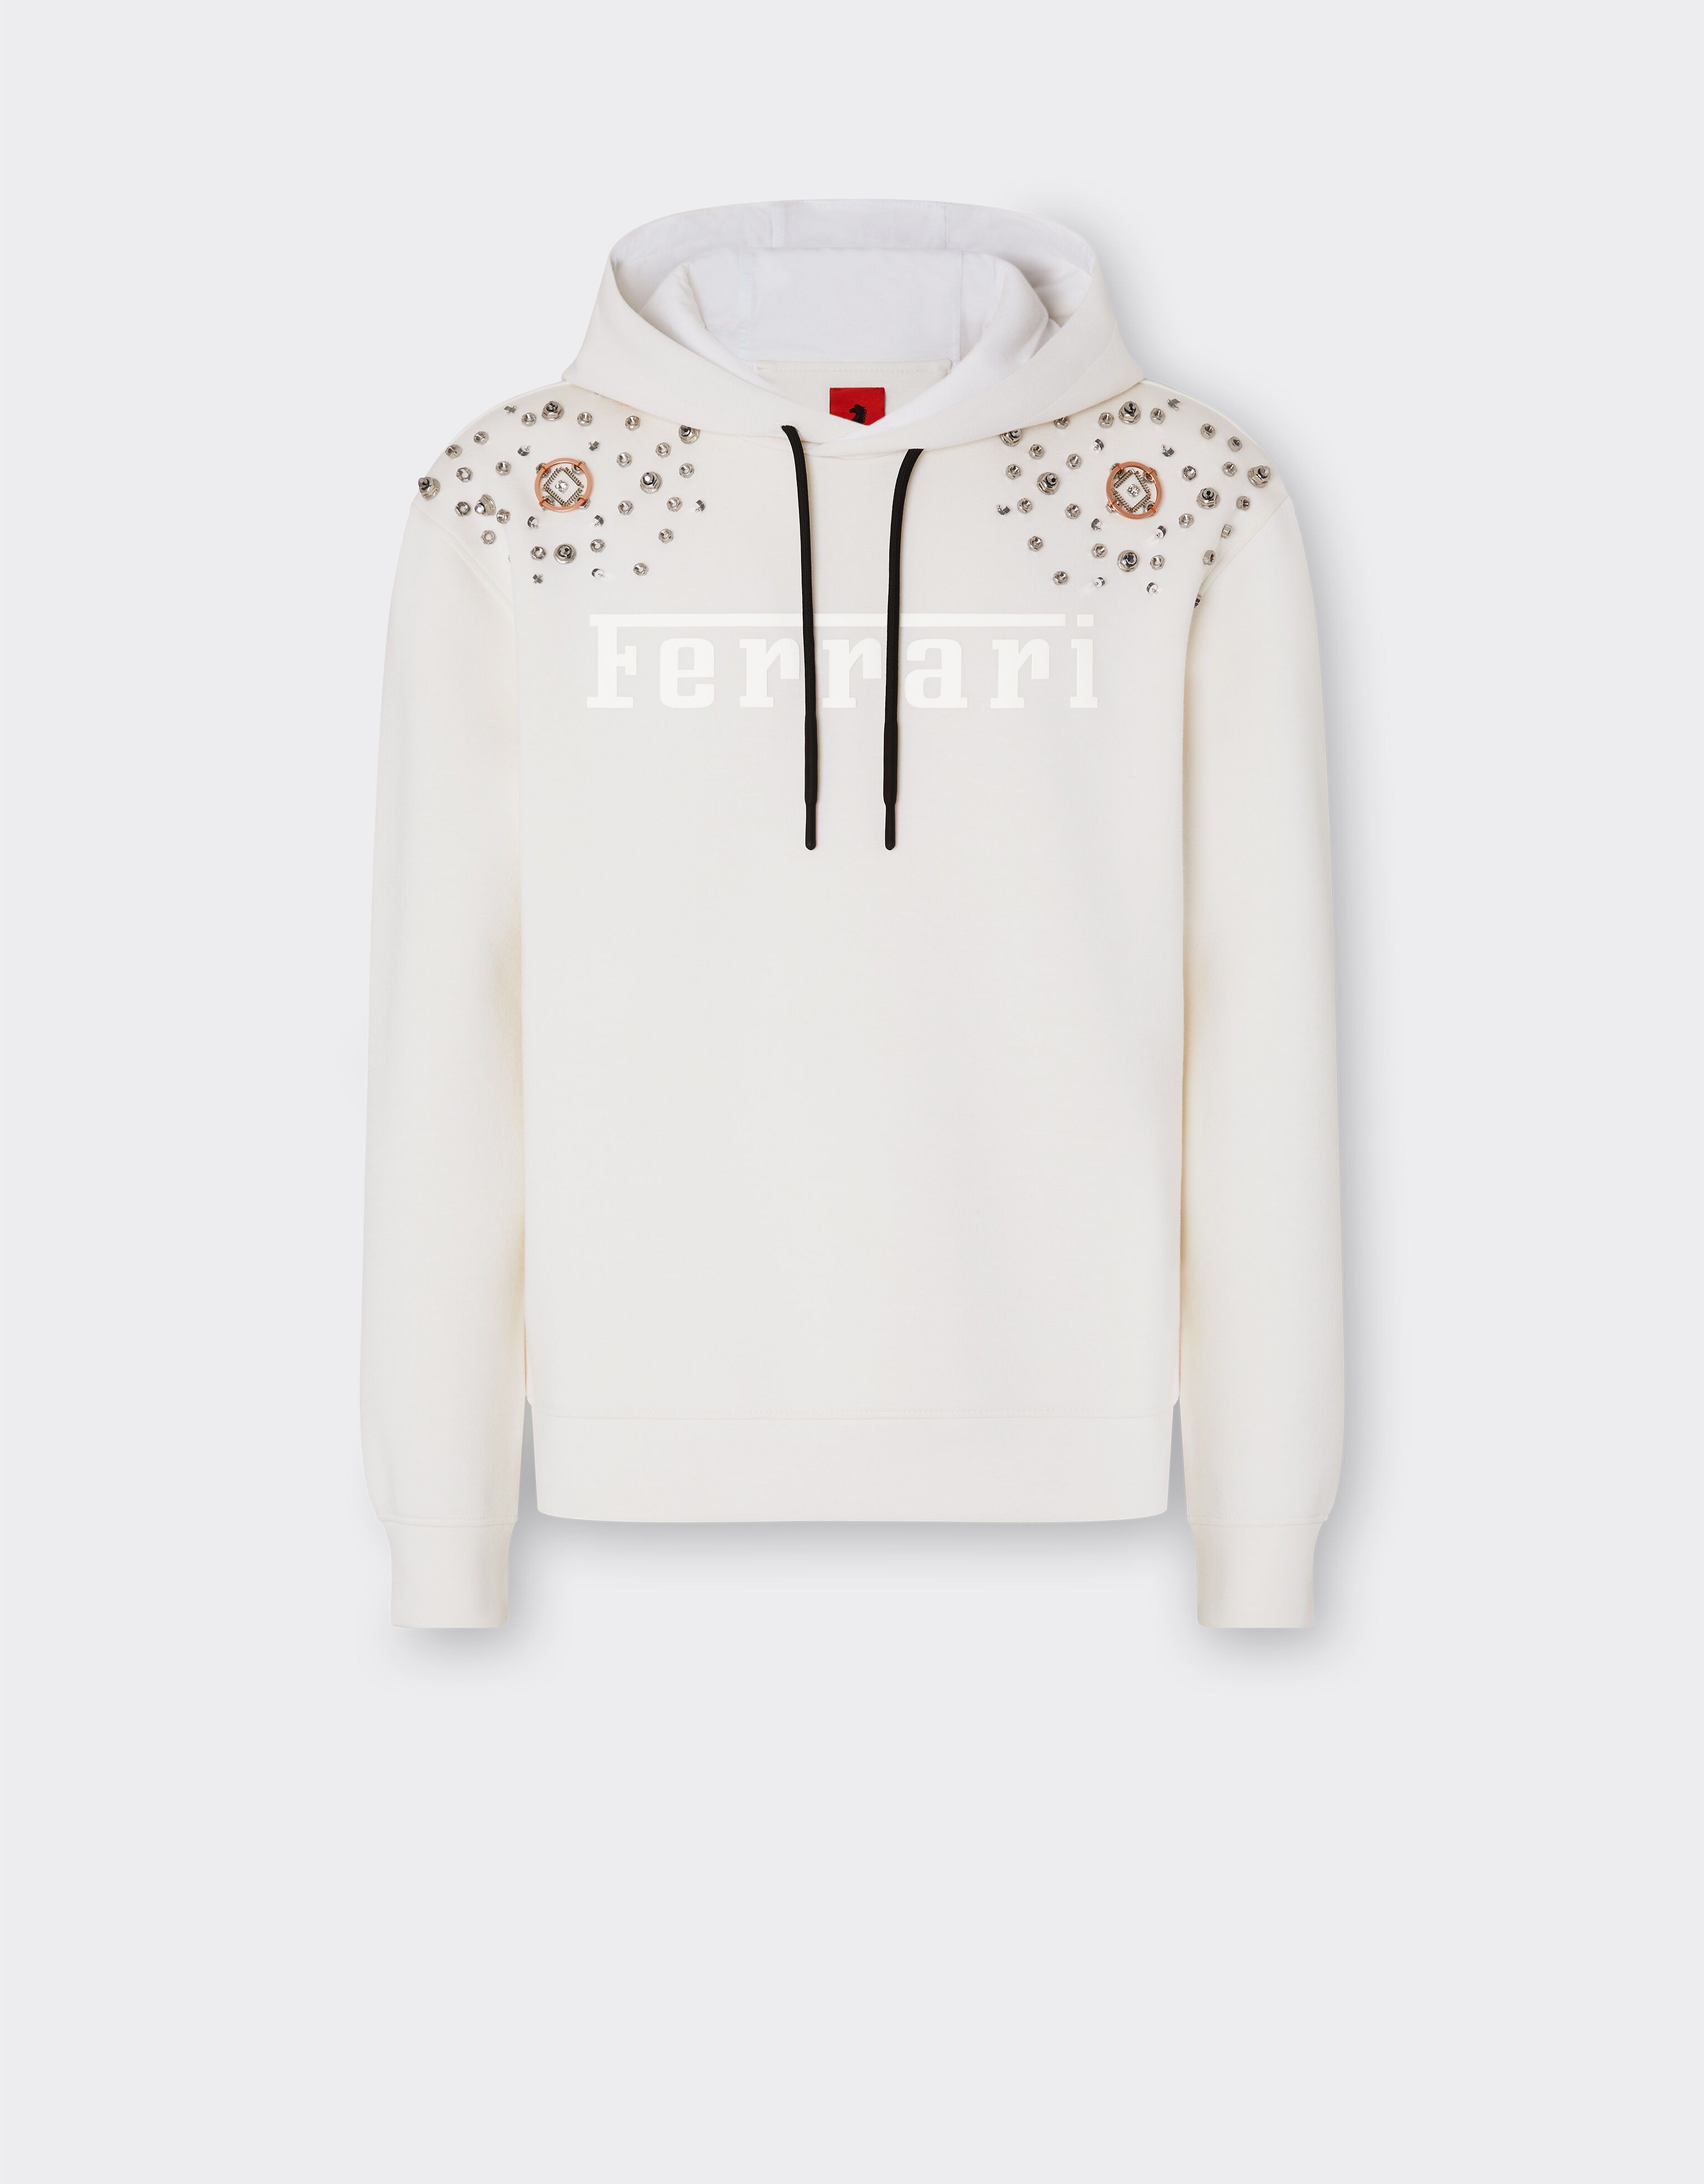 Ferrari Sweatshirt in scuba fabric with metal embroidery and Ferrari logo Optical White 48490f